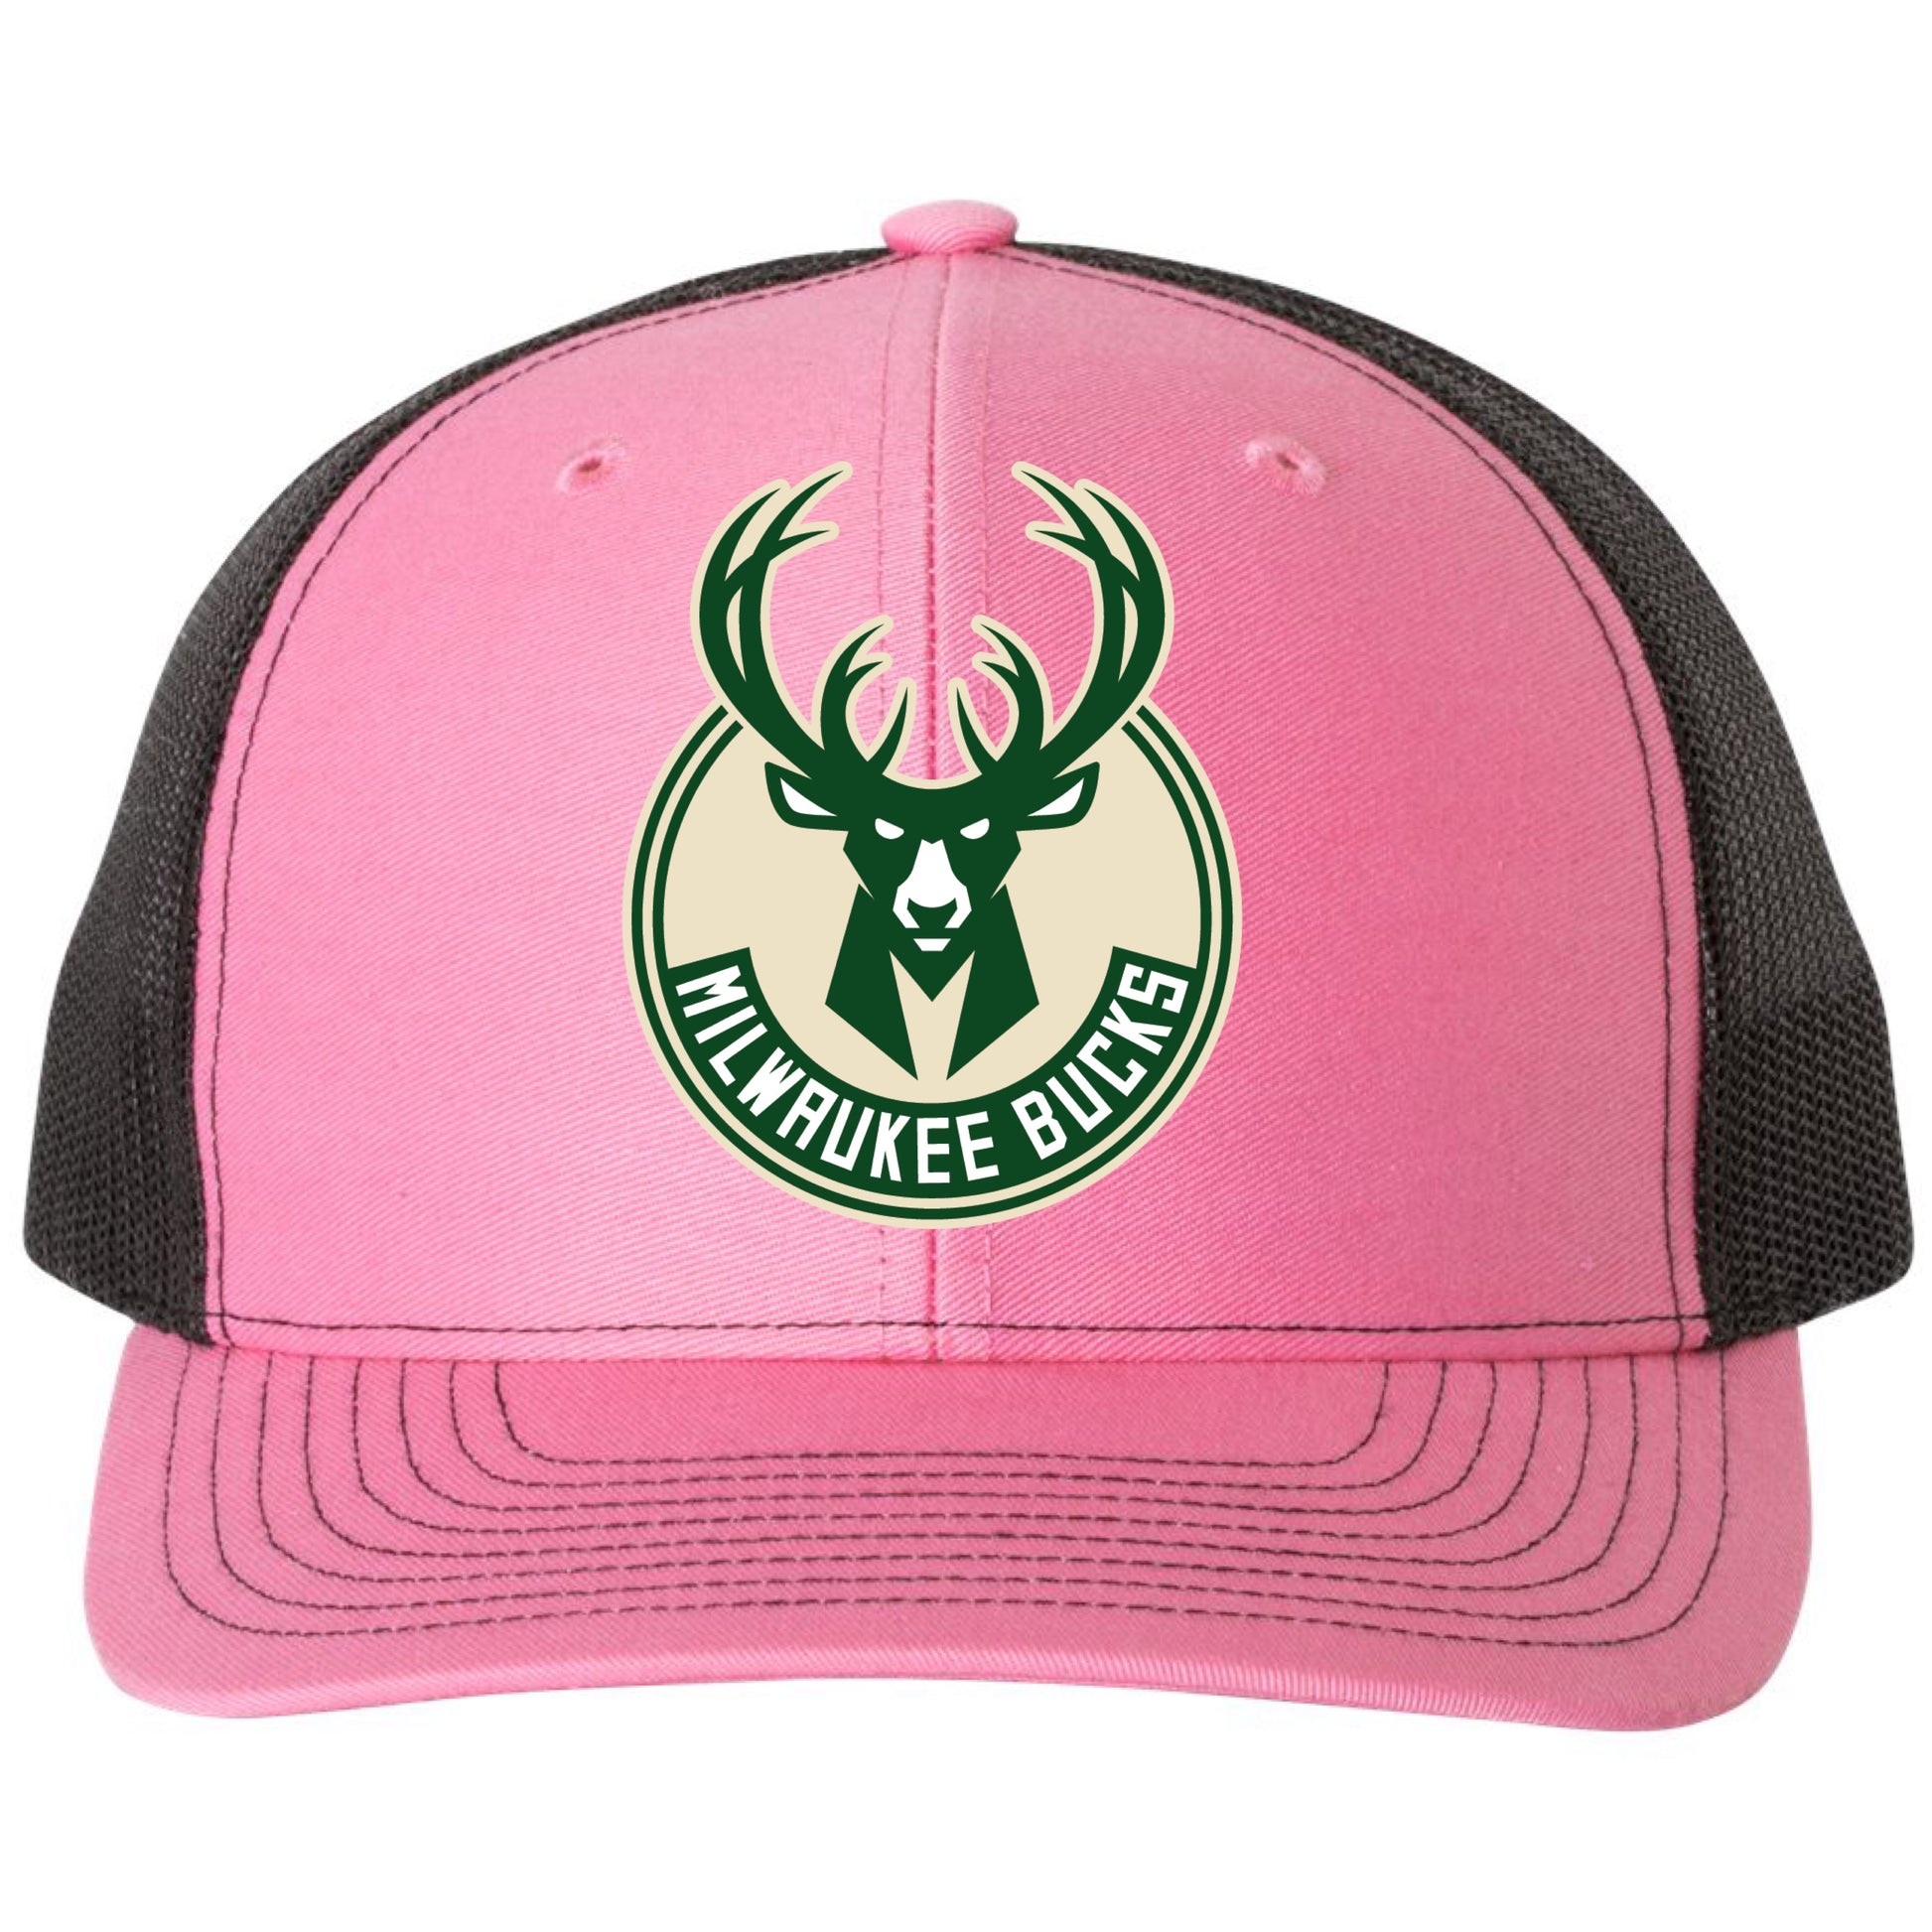 Milwaukee Bucks 3D Snapback Trucker Hat- Hot Pink/ Black - Ten Gallon Hat Co.